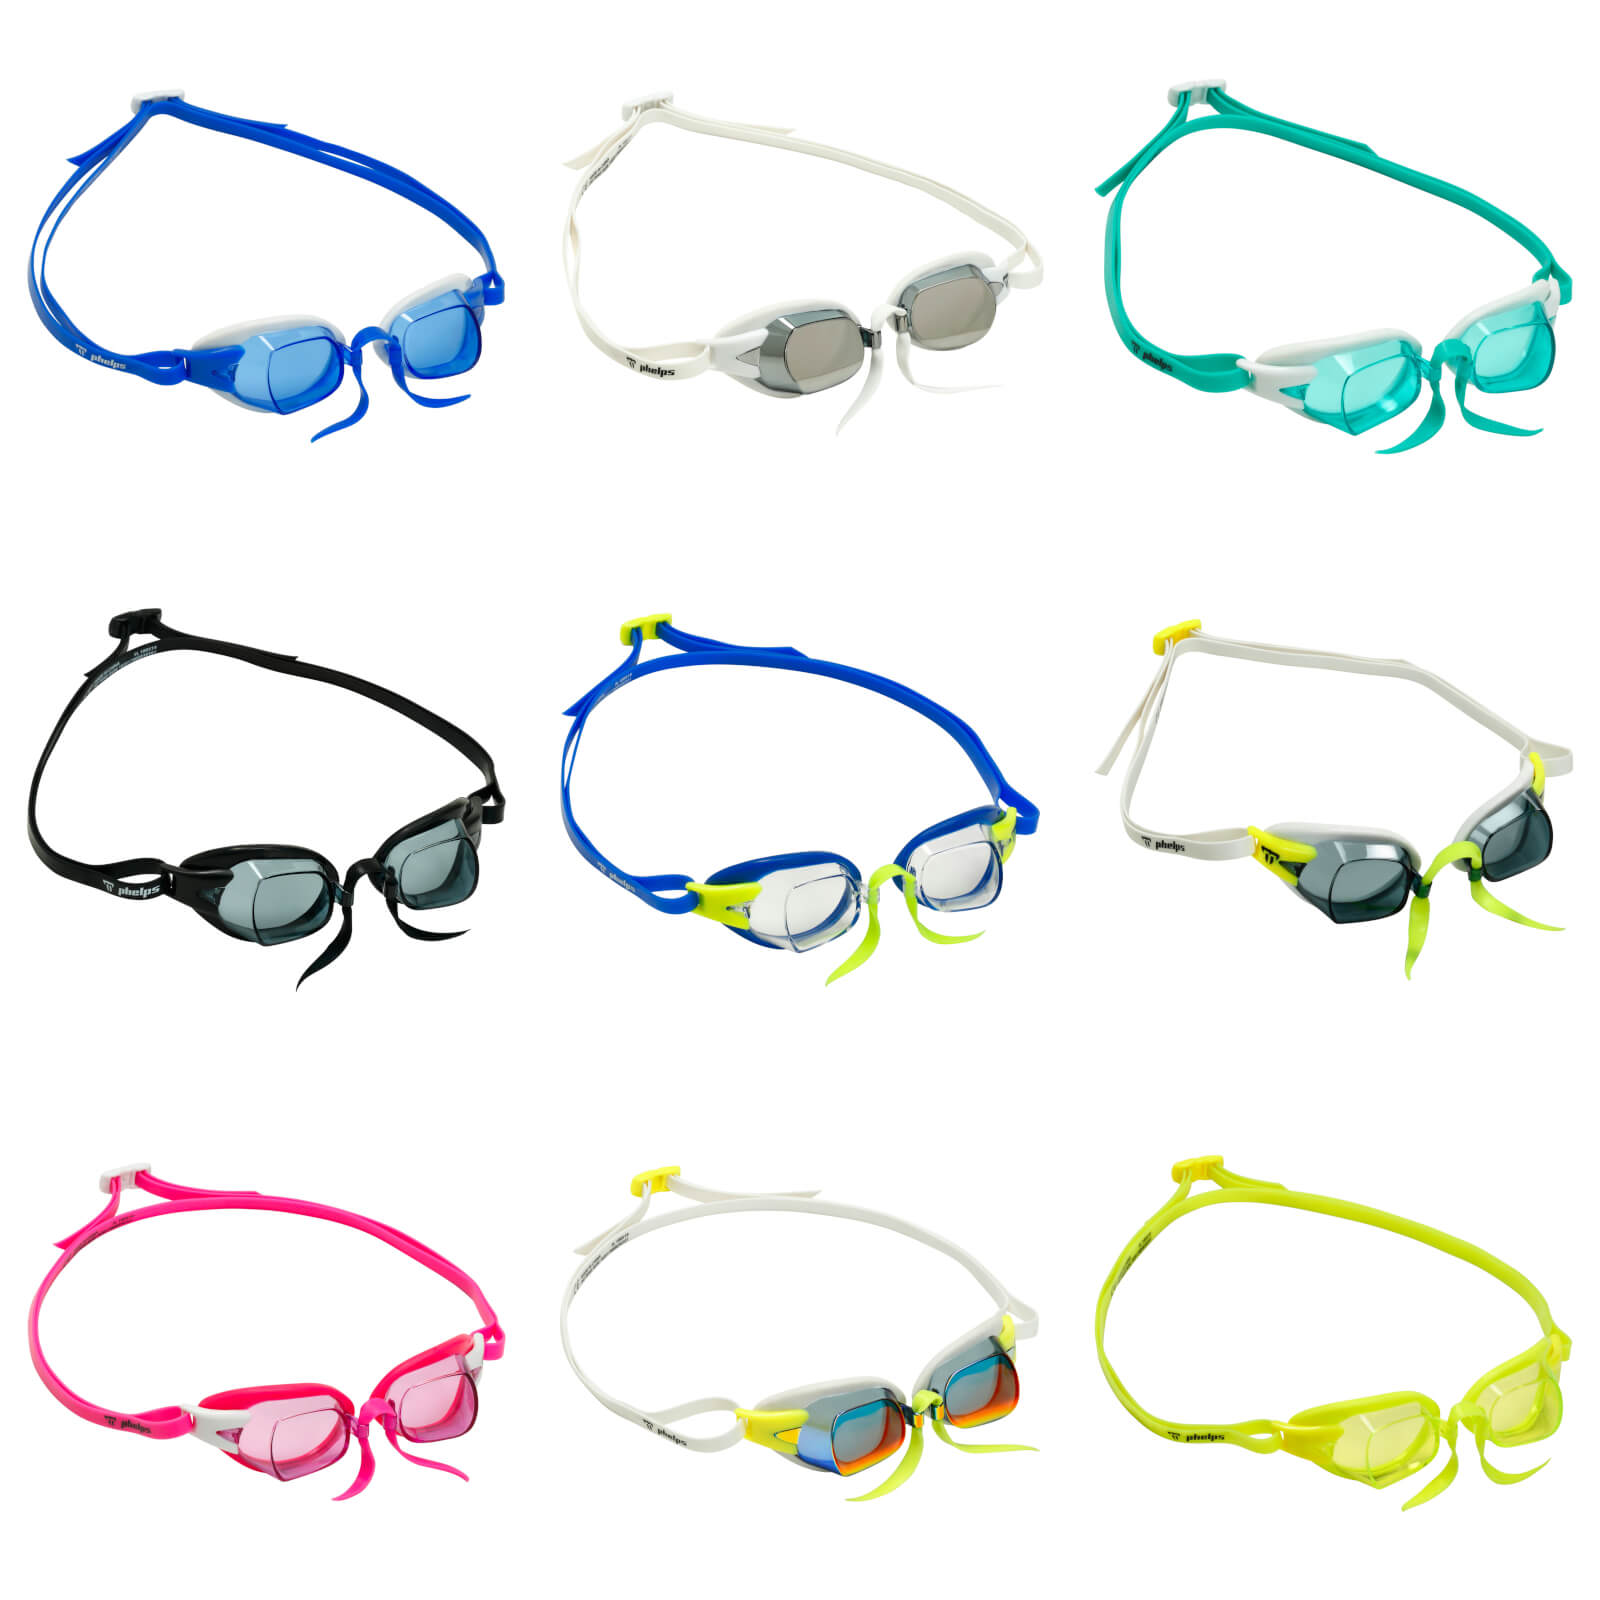 Phelps Chronos Men's Swimming Goggles Collection